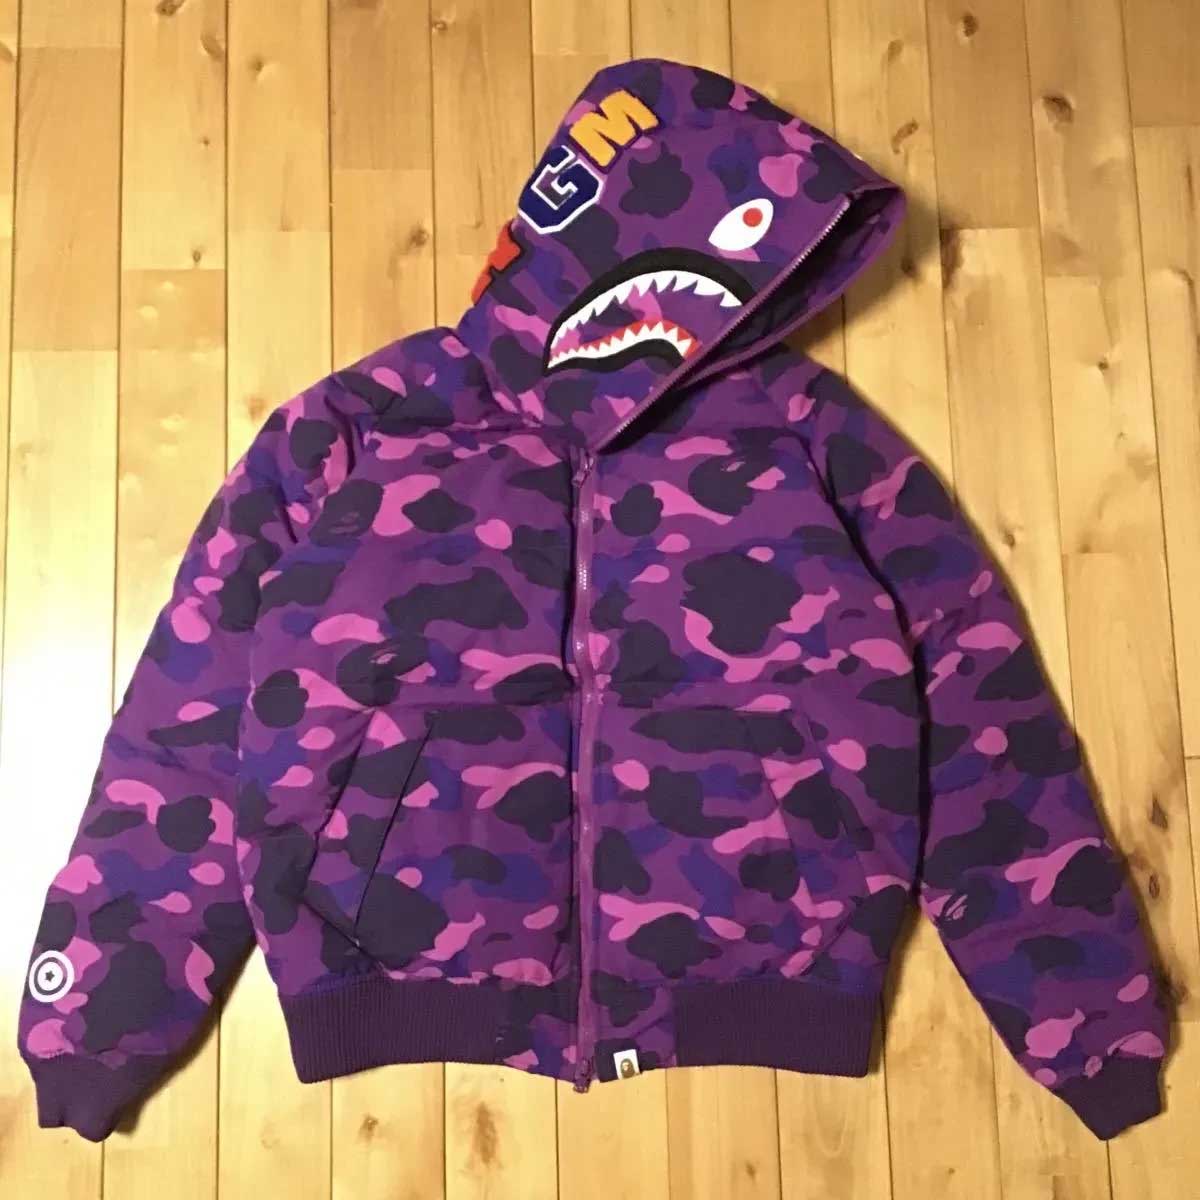 Shark full zip hoodie jacket BAPE Purple camo A2 Jackets